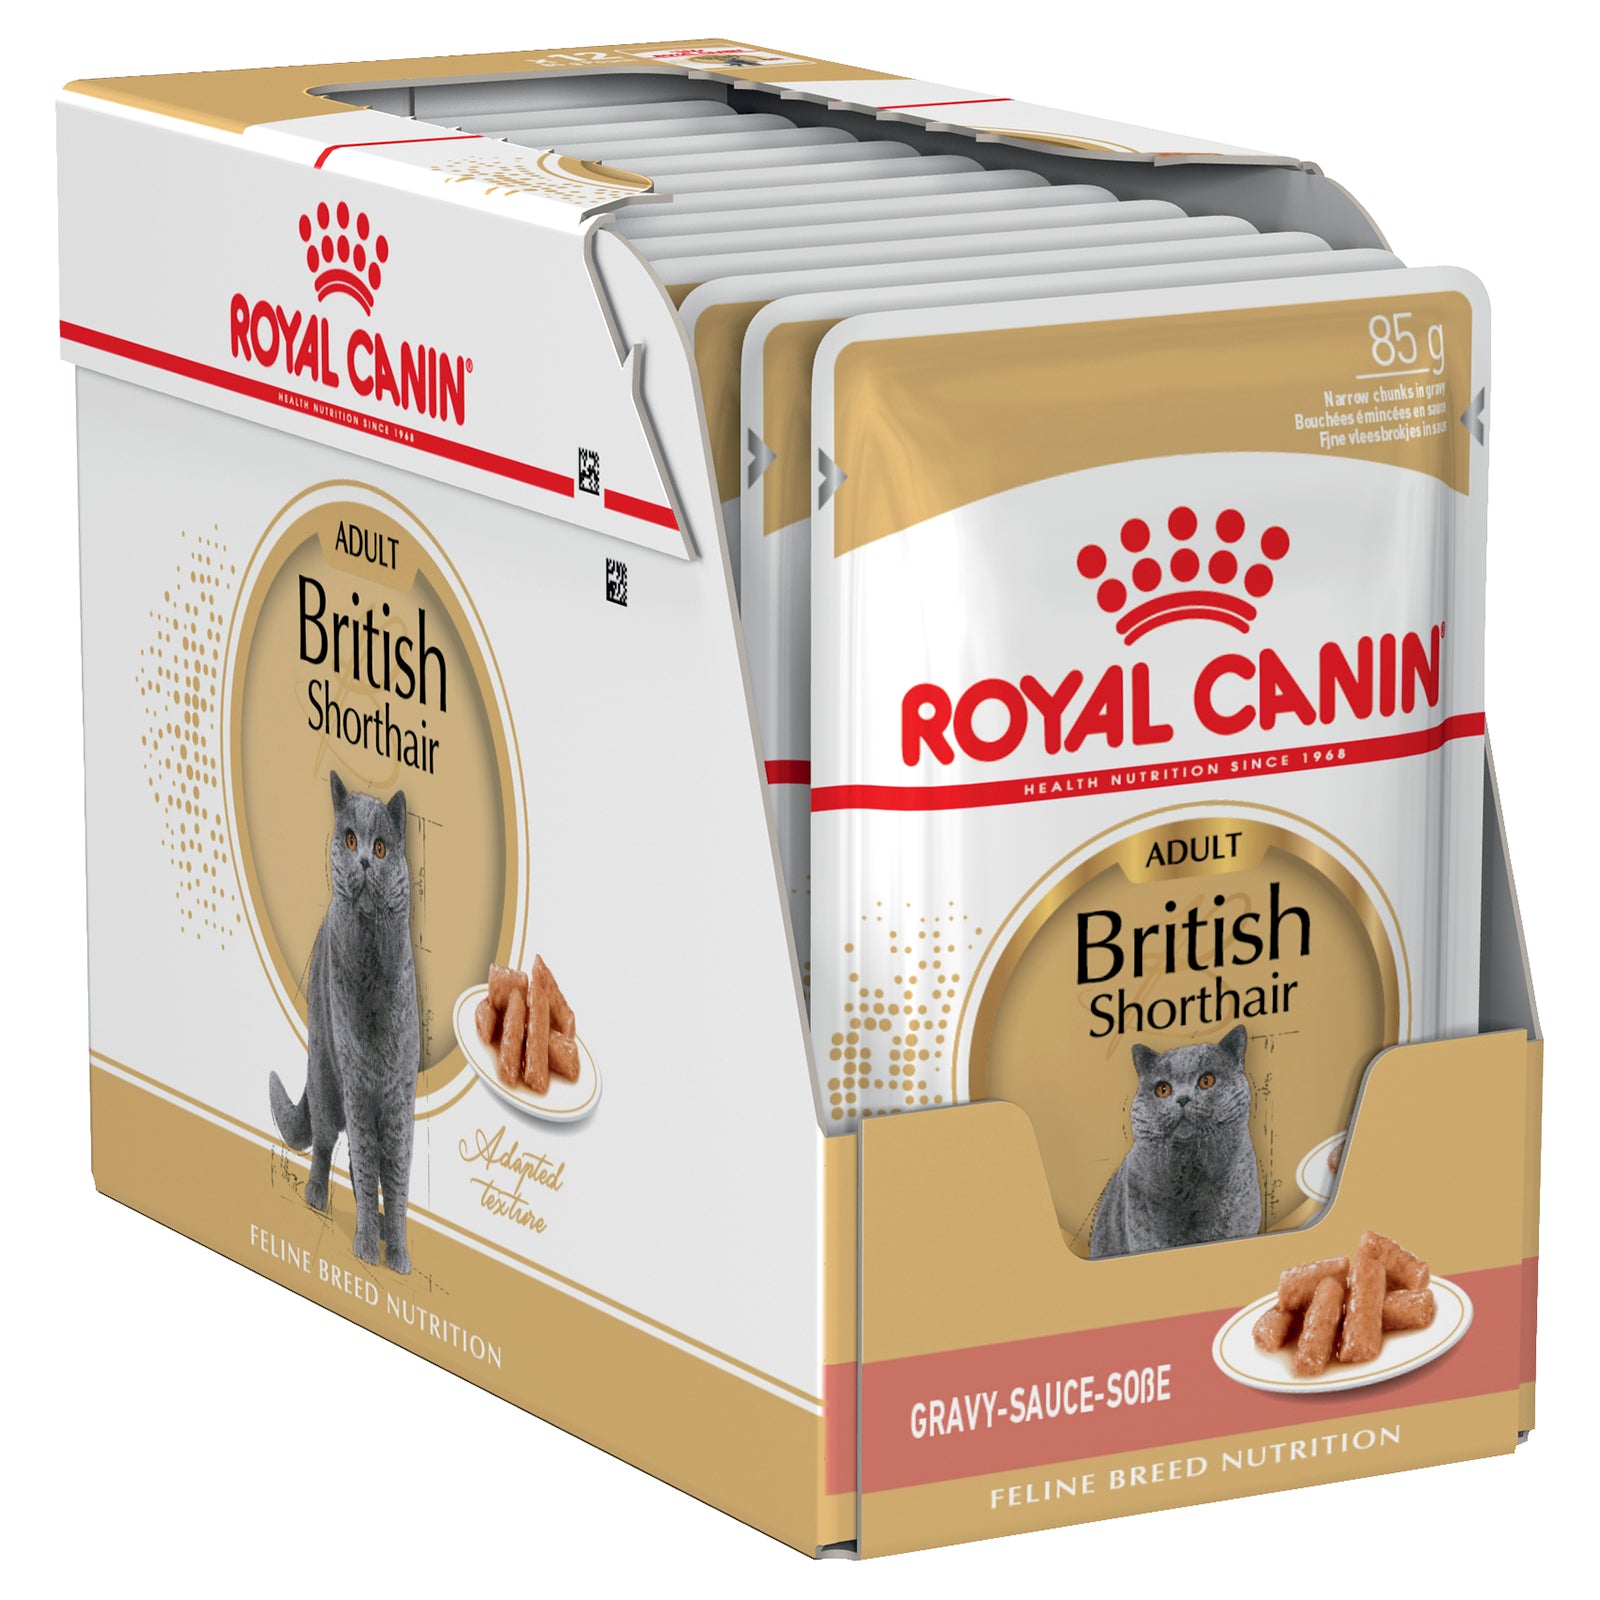 Royal Canin Cat Food Pouch Adult British Shorthair Gravy